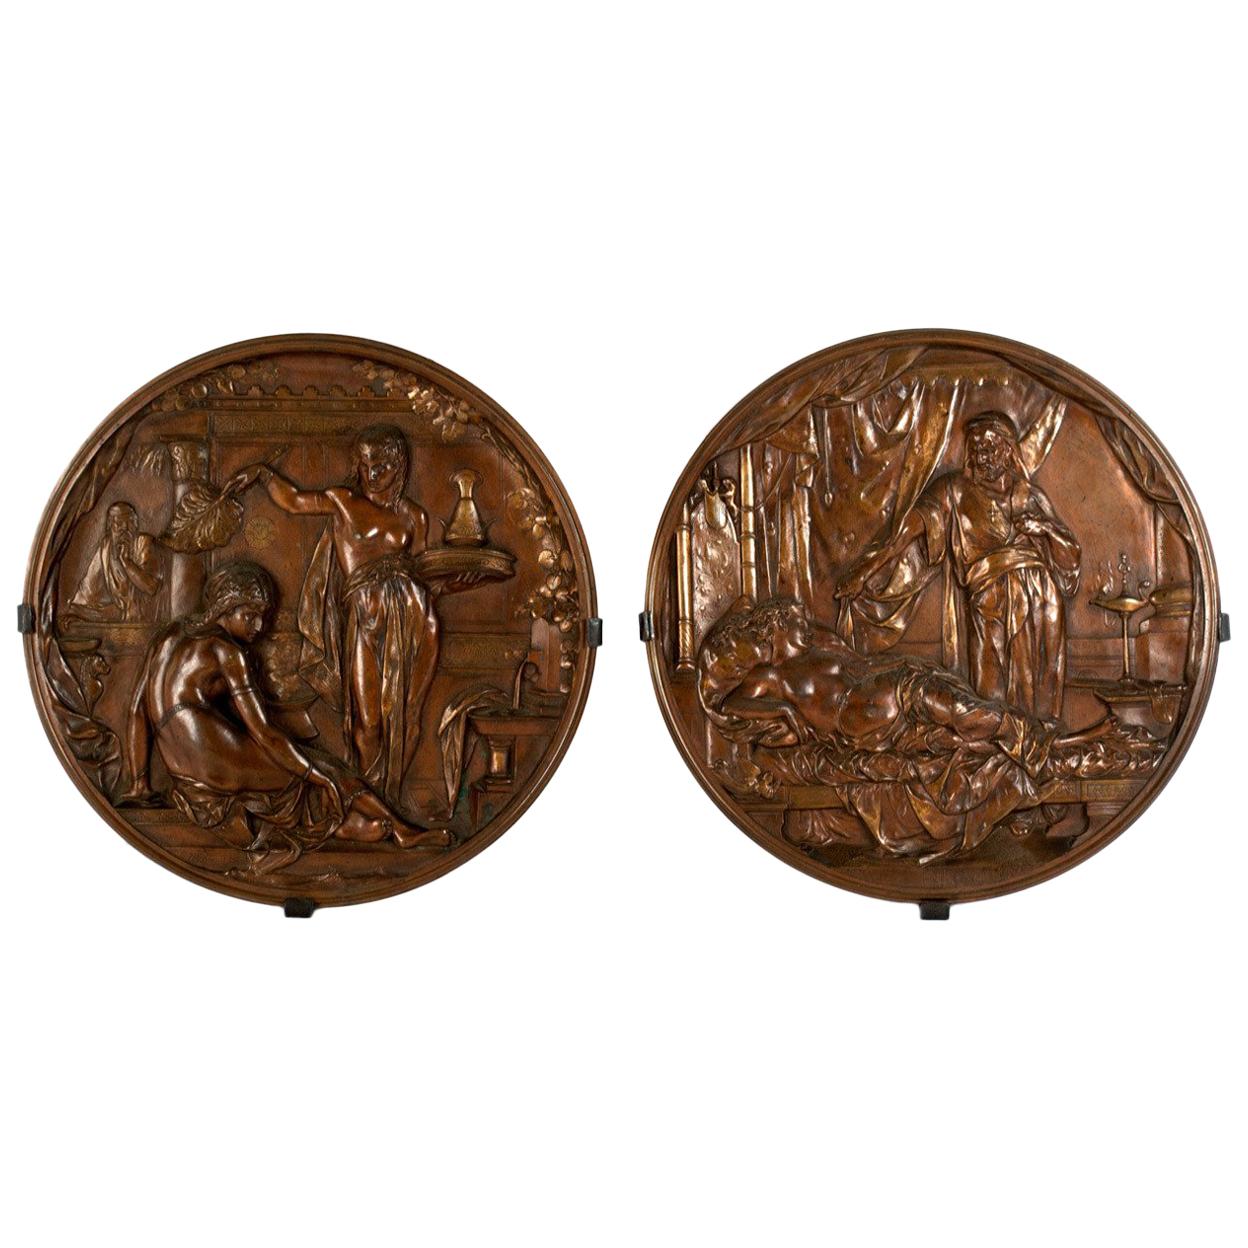 Medallions of King David and Bathsheba, Othello and Desdemona